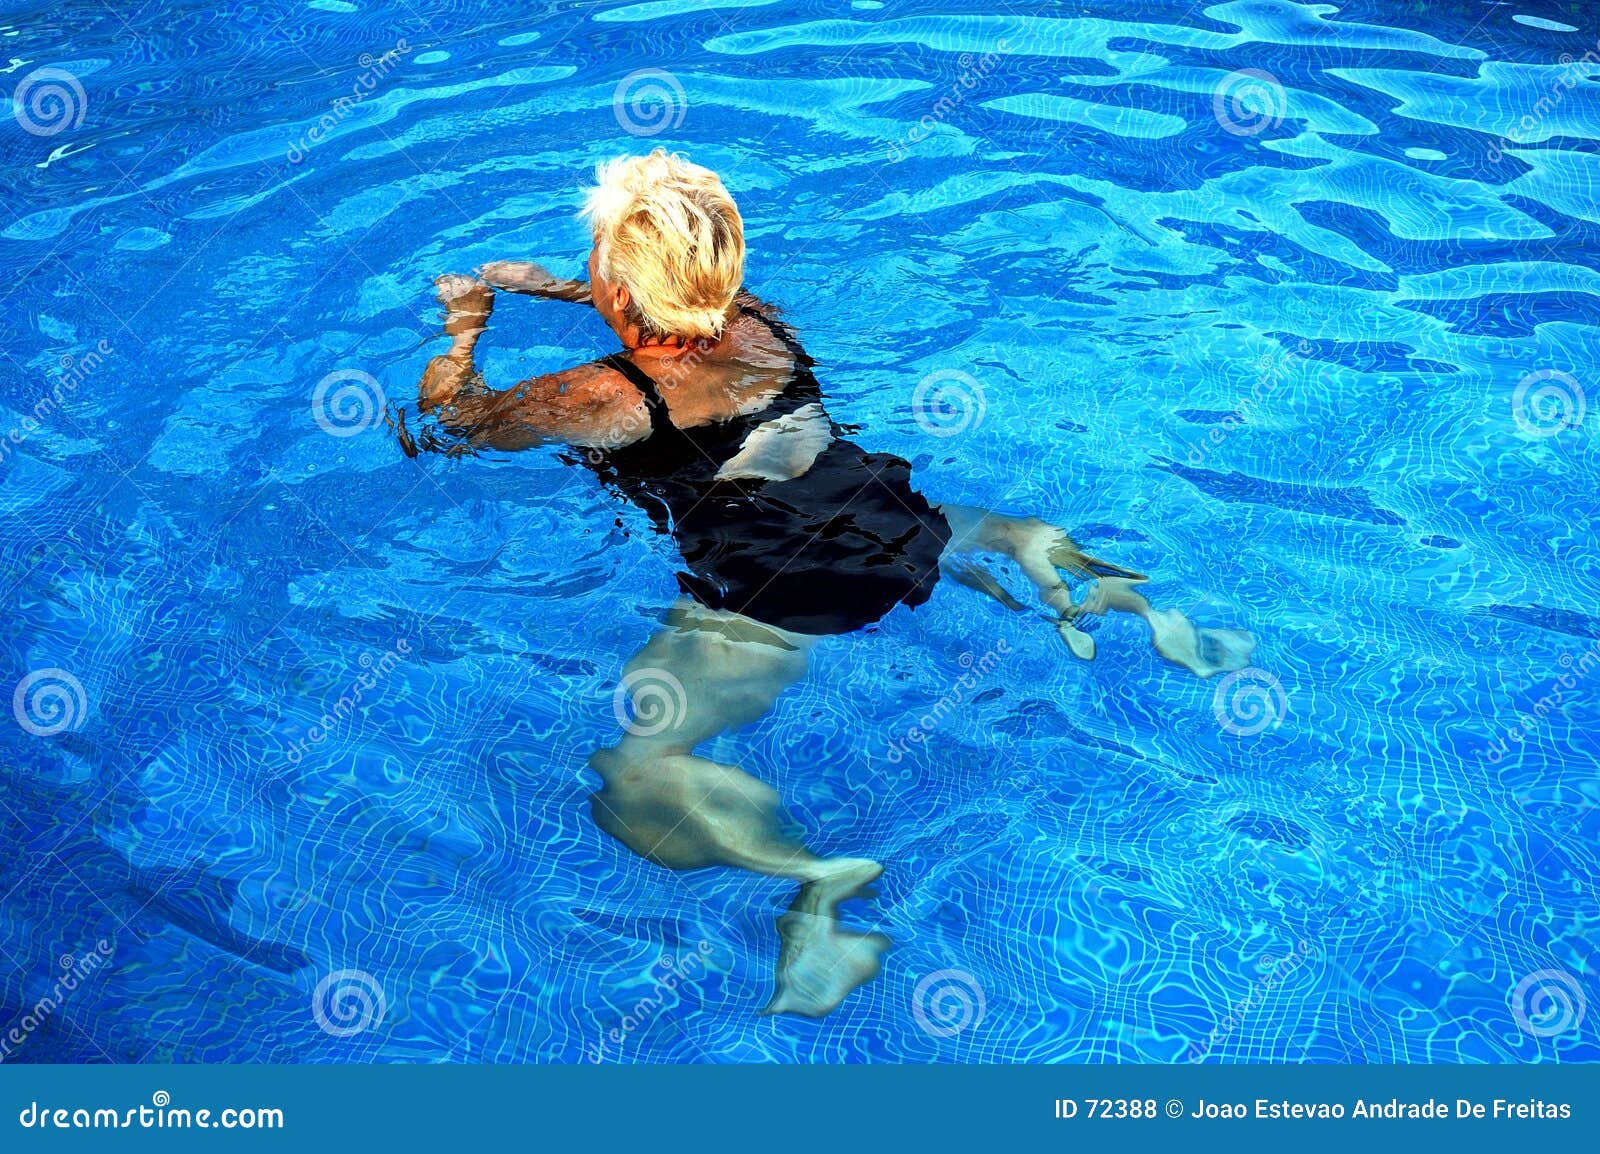 women swiming